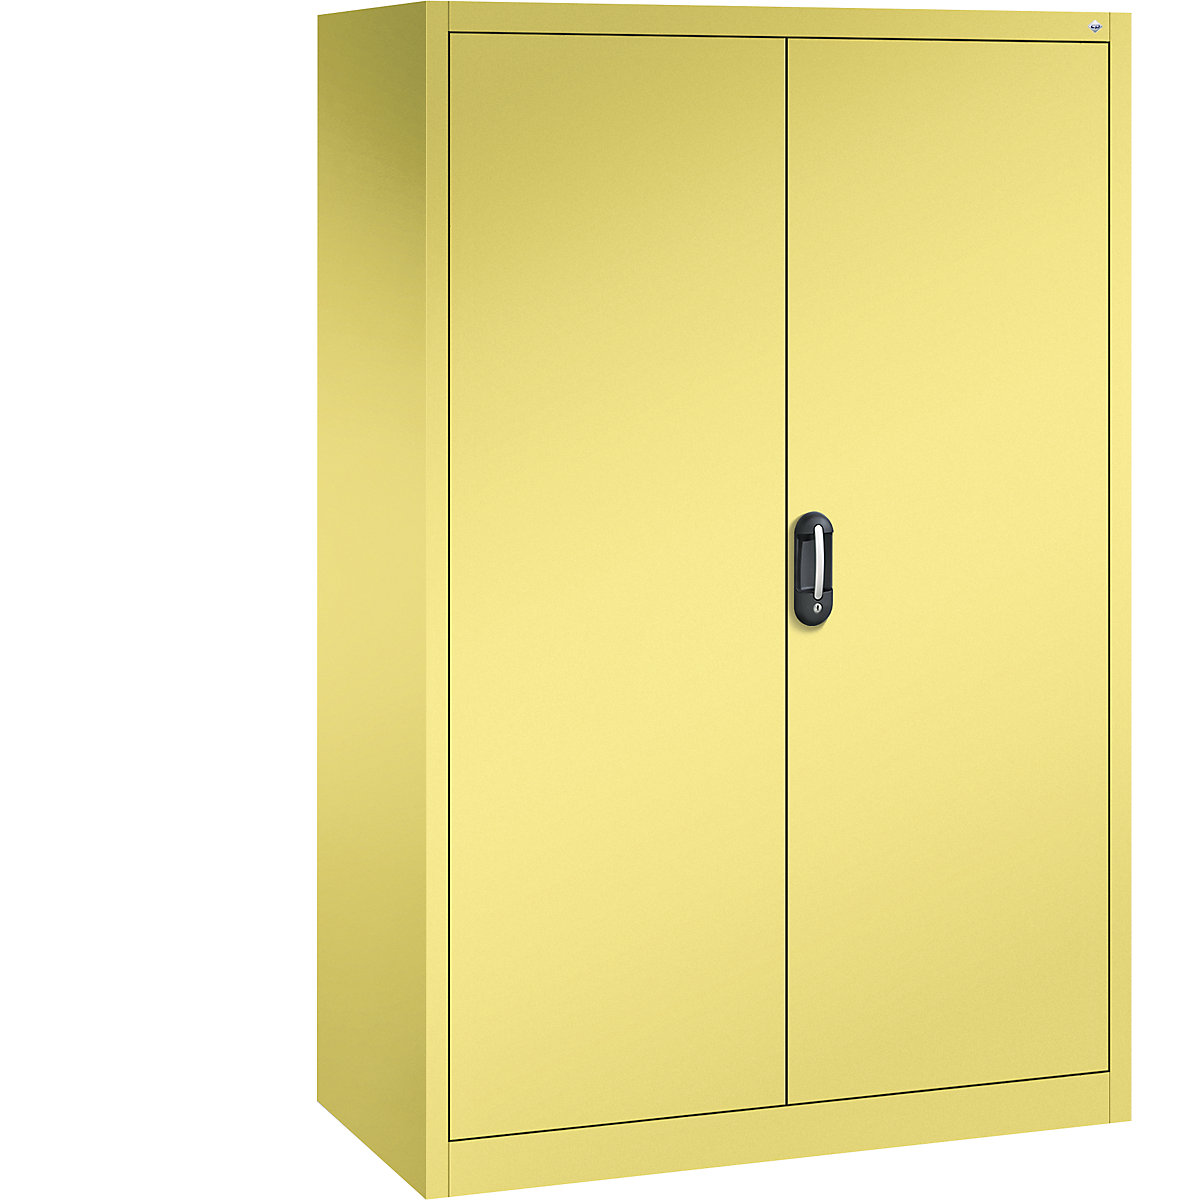 ACURADO universal cupboard – C+P, WxD 1200 x 600 mm, sulphur yellow / sulphur yellow-16